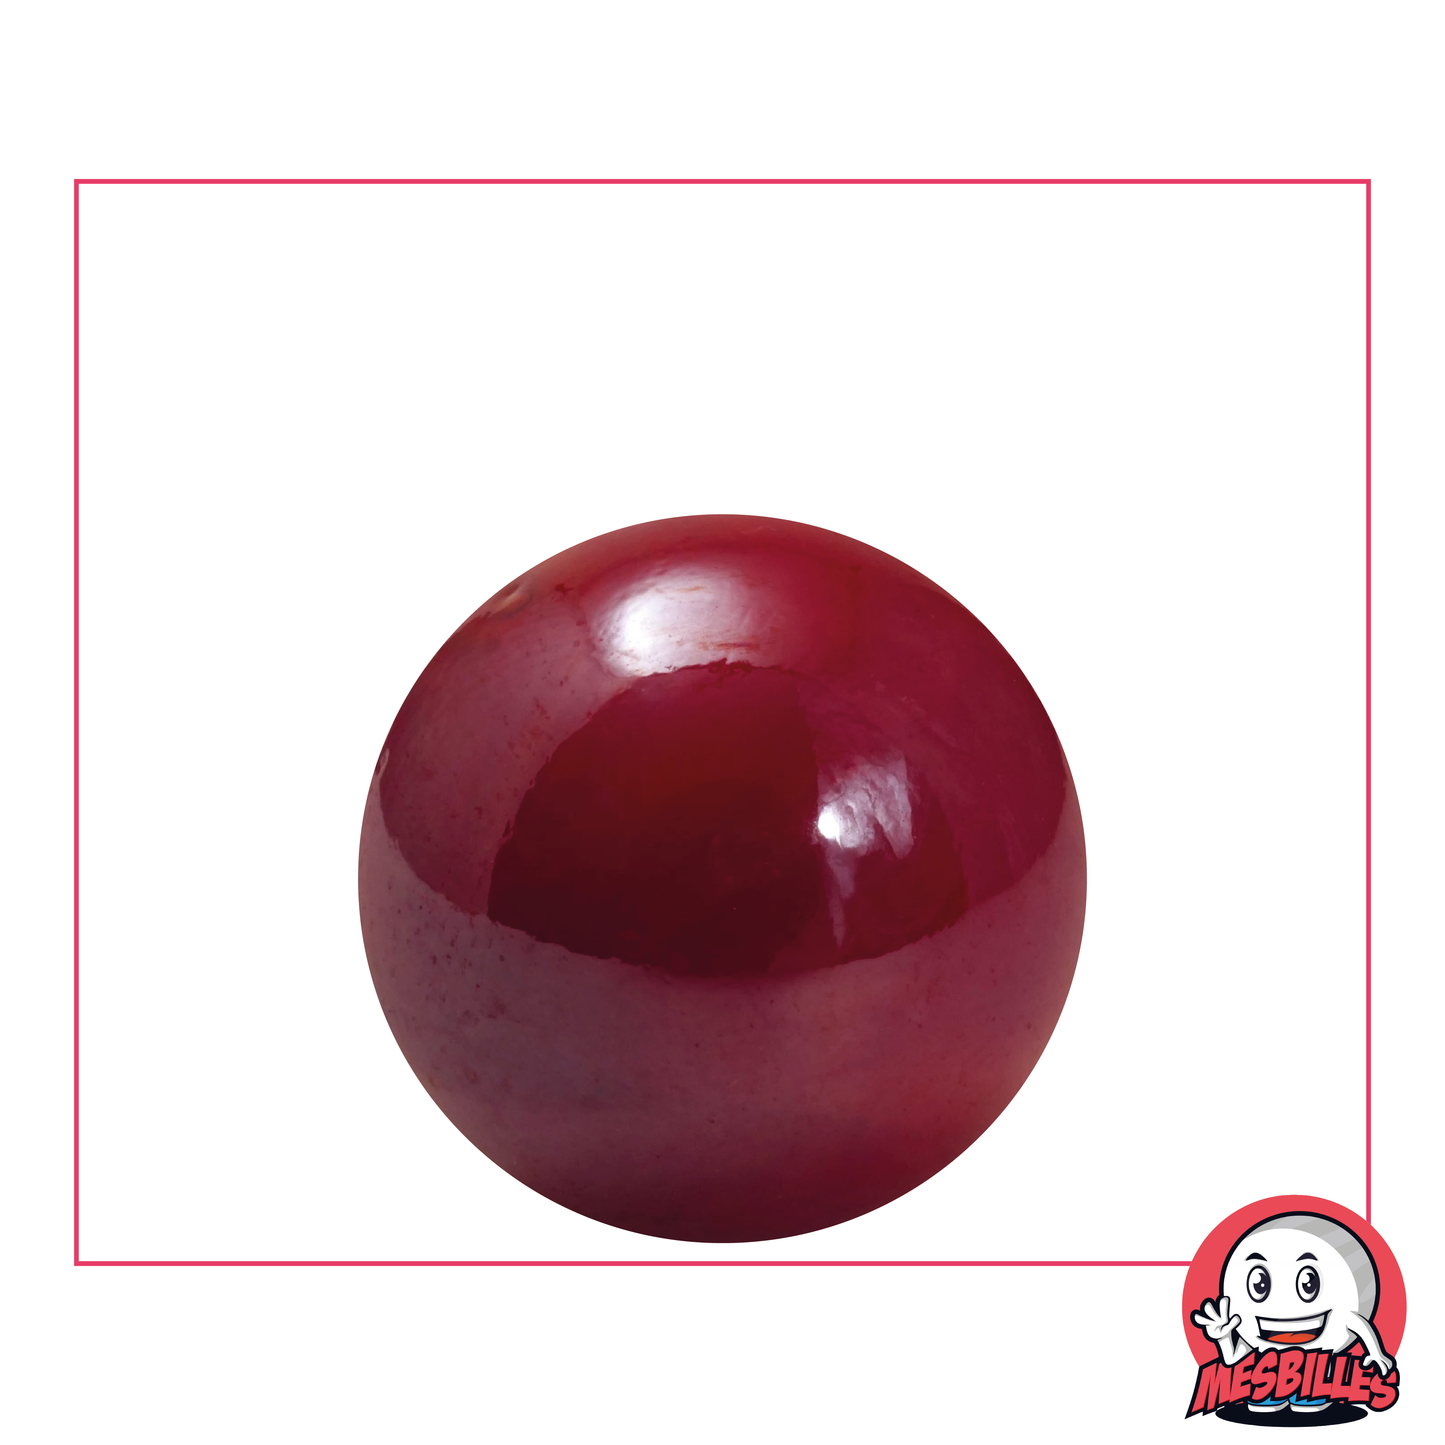 Bille Glossy 14 mm - Verre Opaque et Brillant Rouge - MesBilles